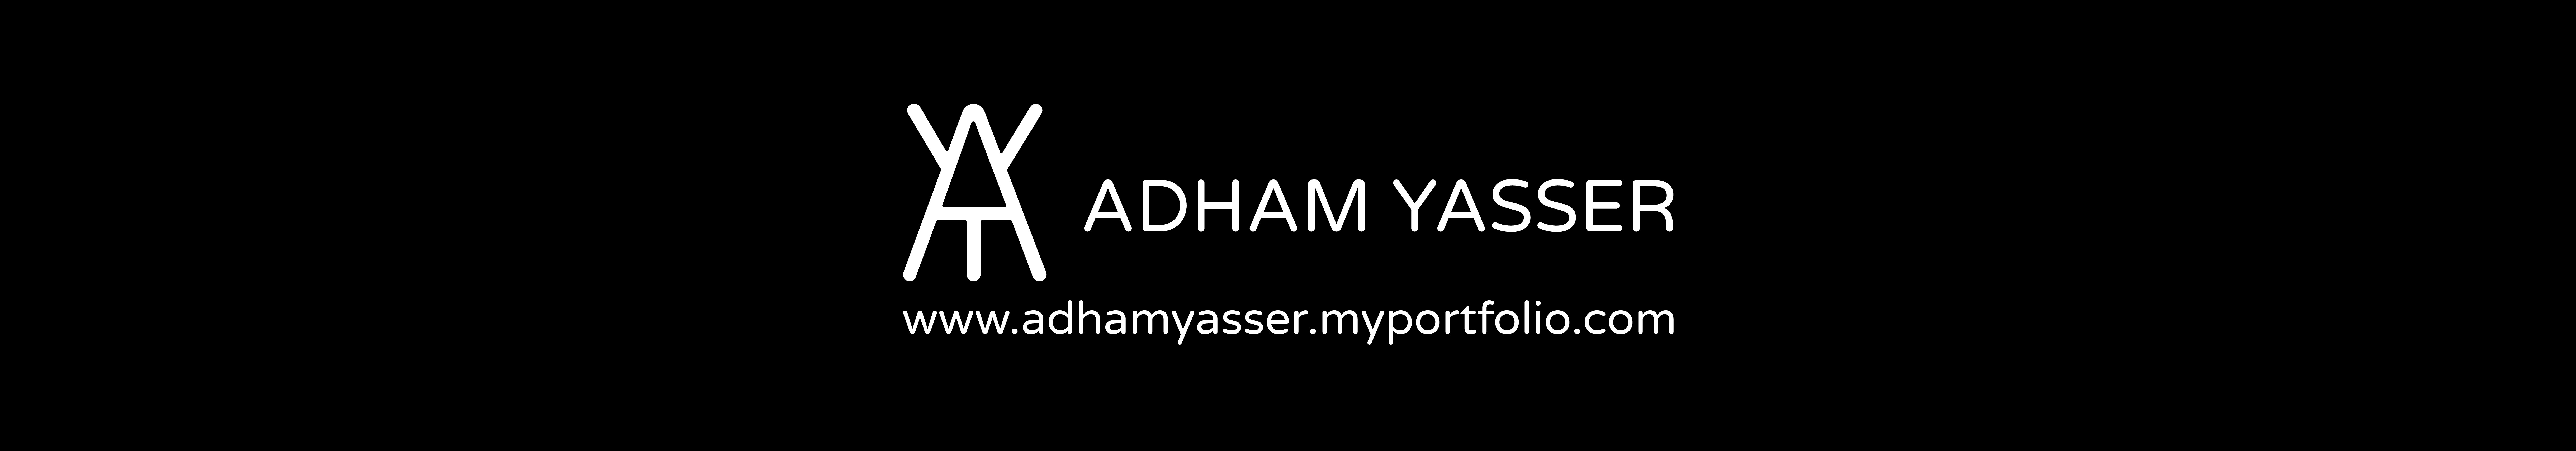 Adham Yasser's profile banner